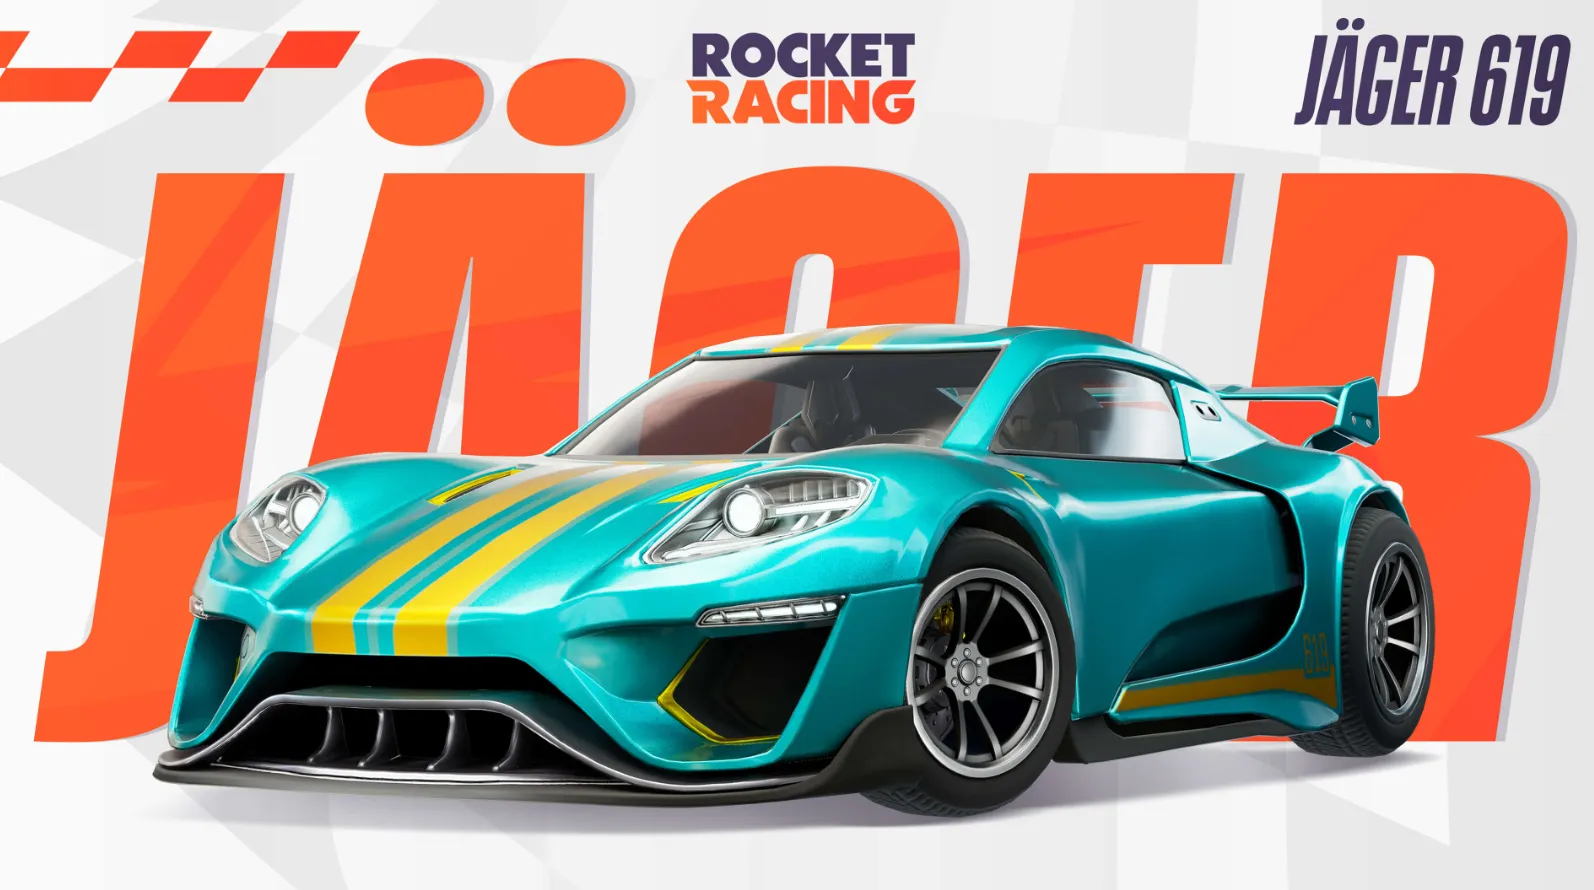 Jager Rocket Racing.jpg